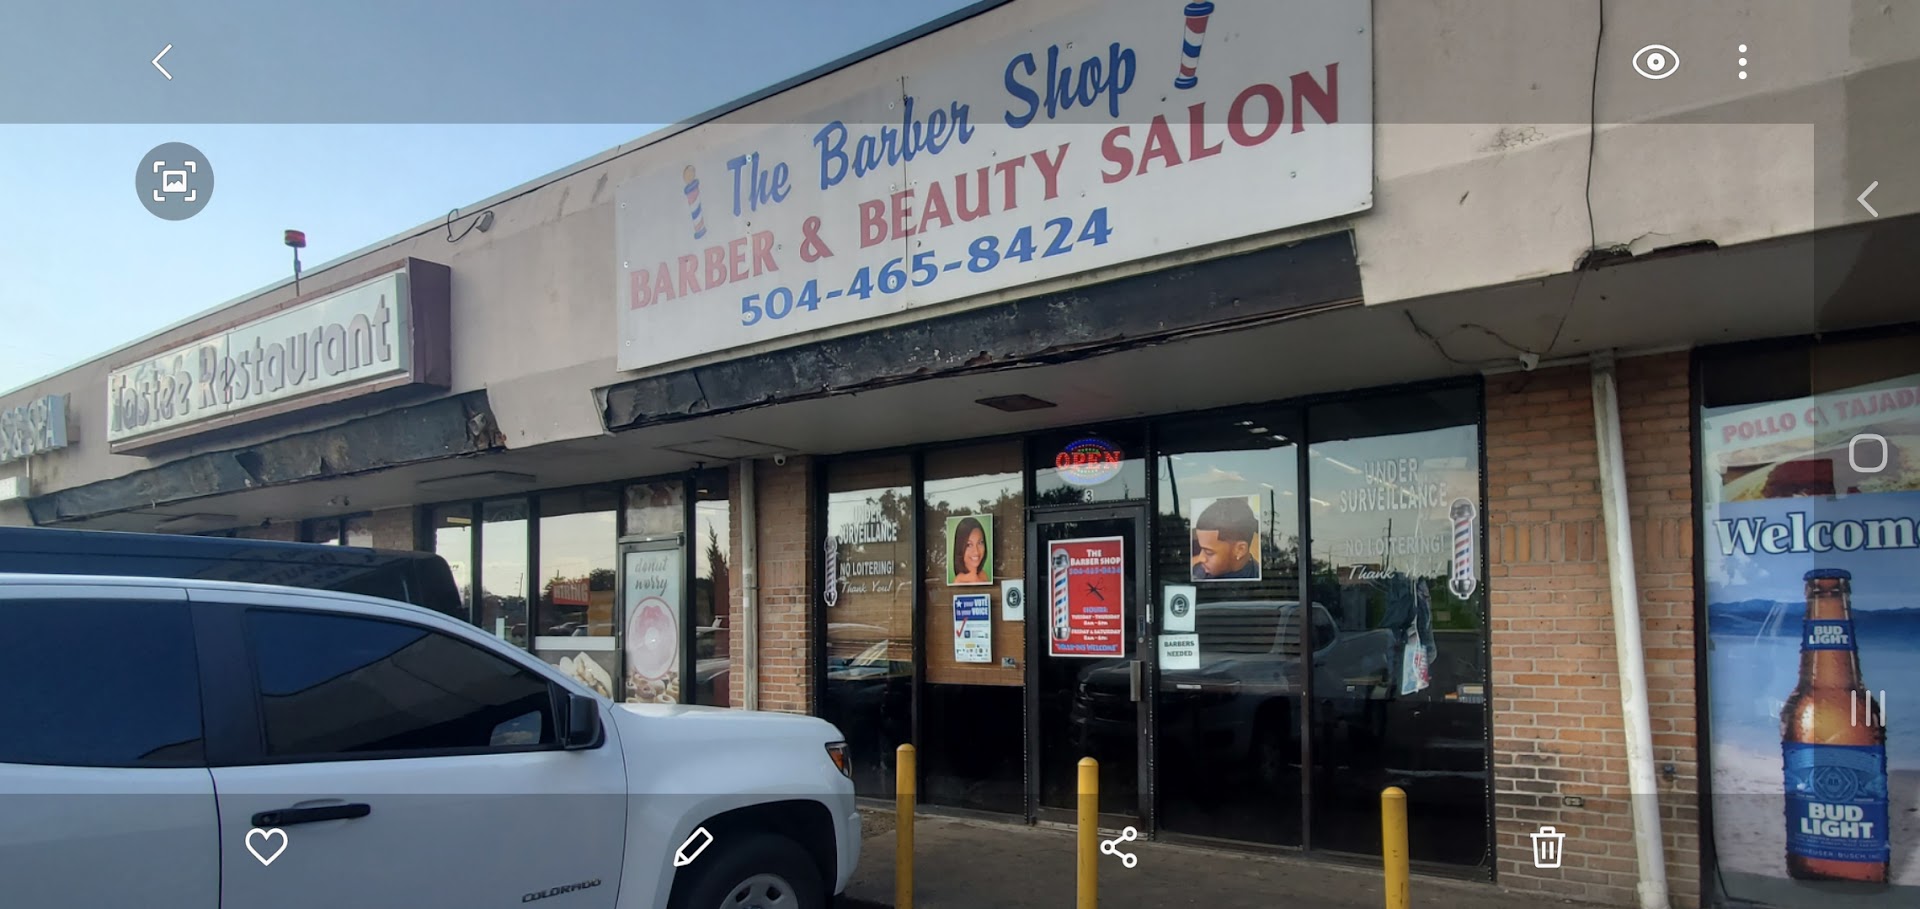 Barber & Beauty Shop